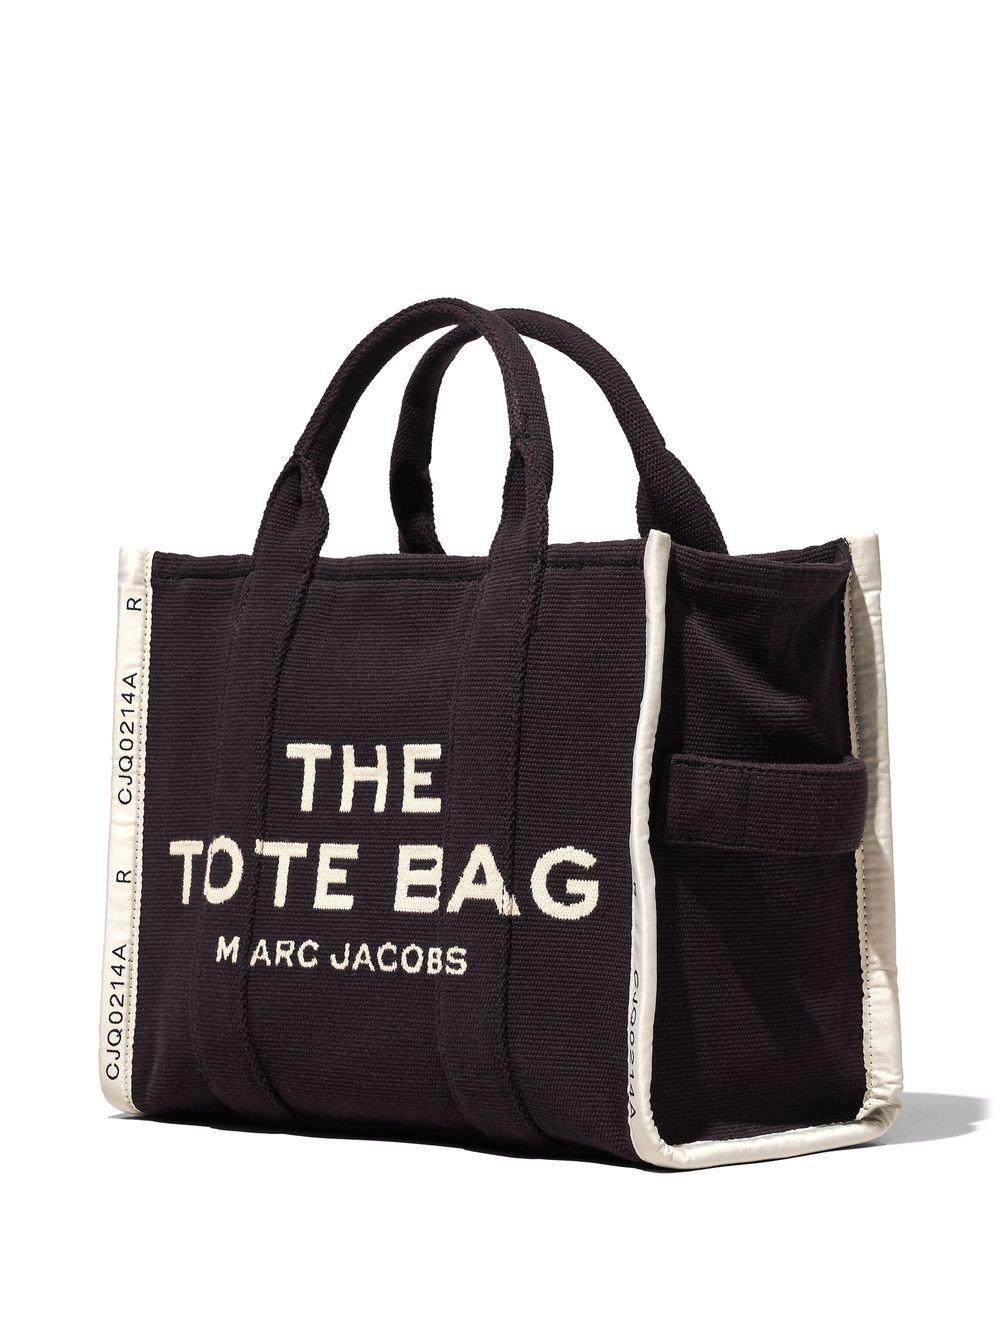 The Medium Tote Bag Marc Jacobs Negro